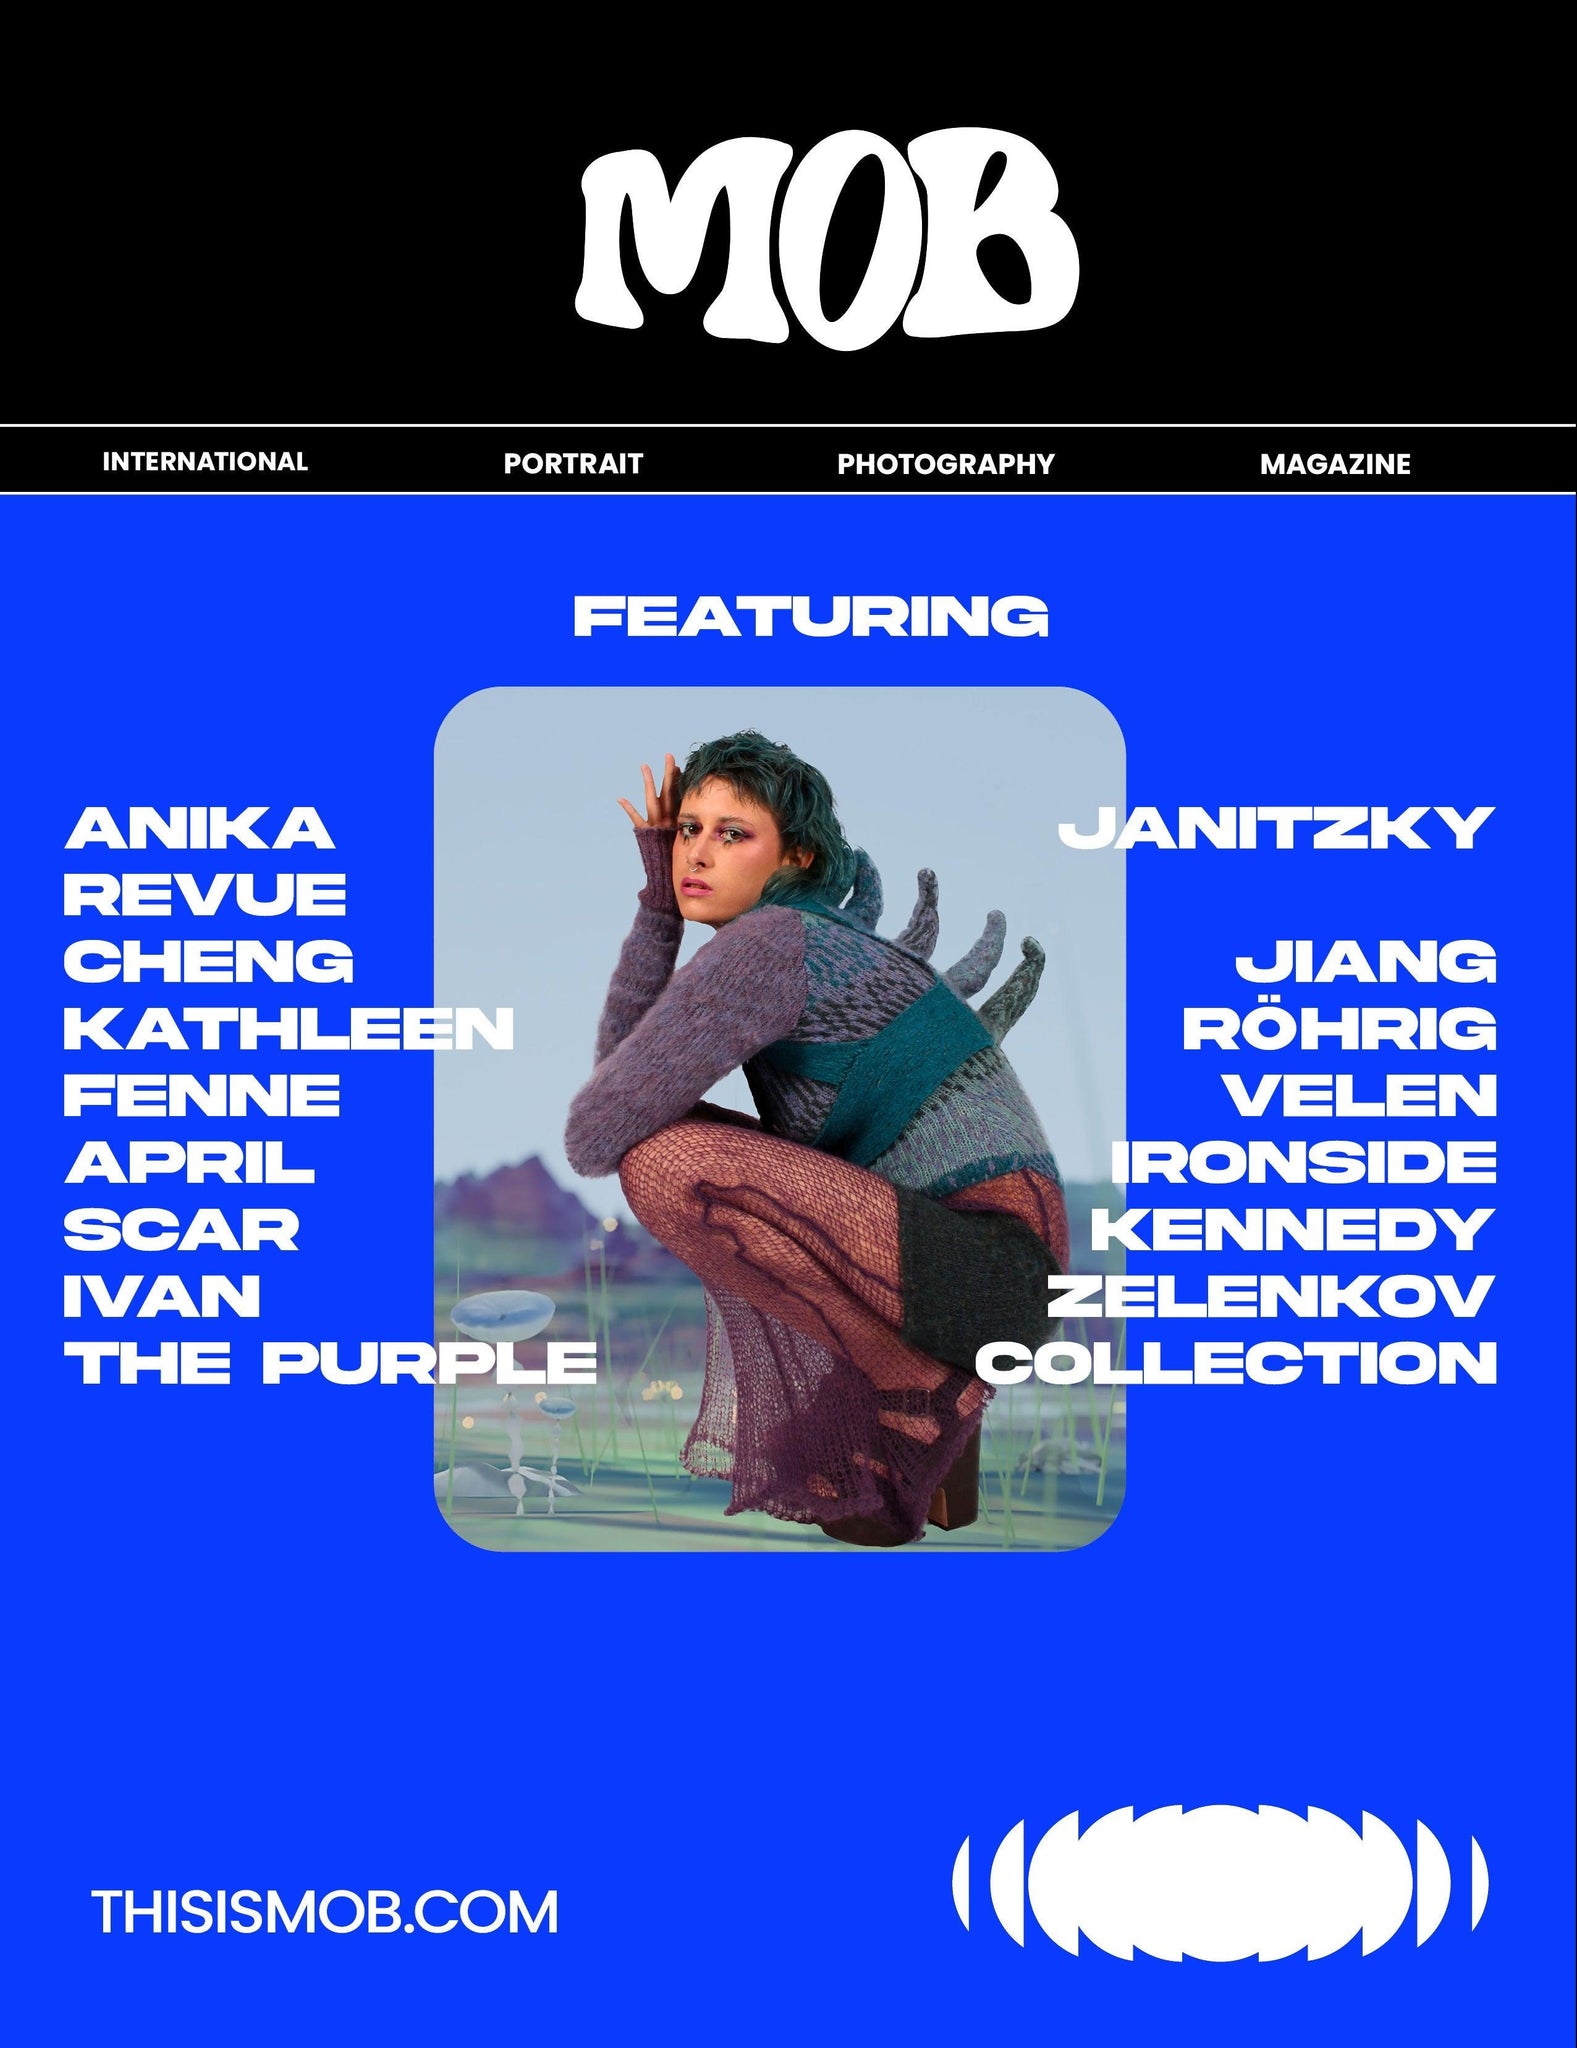 MOB JOURNAL | VOLUME TWENTY EIGHT | ISSUE #03 - Mob Journal